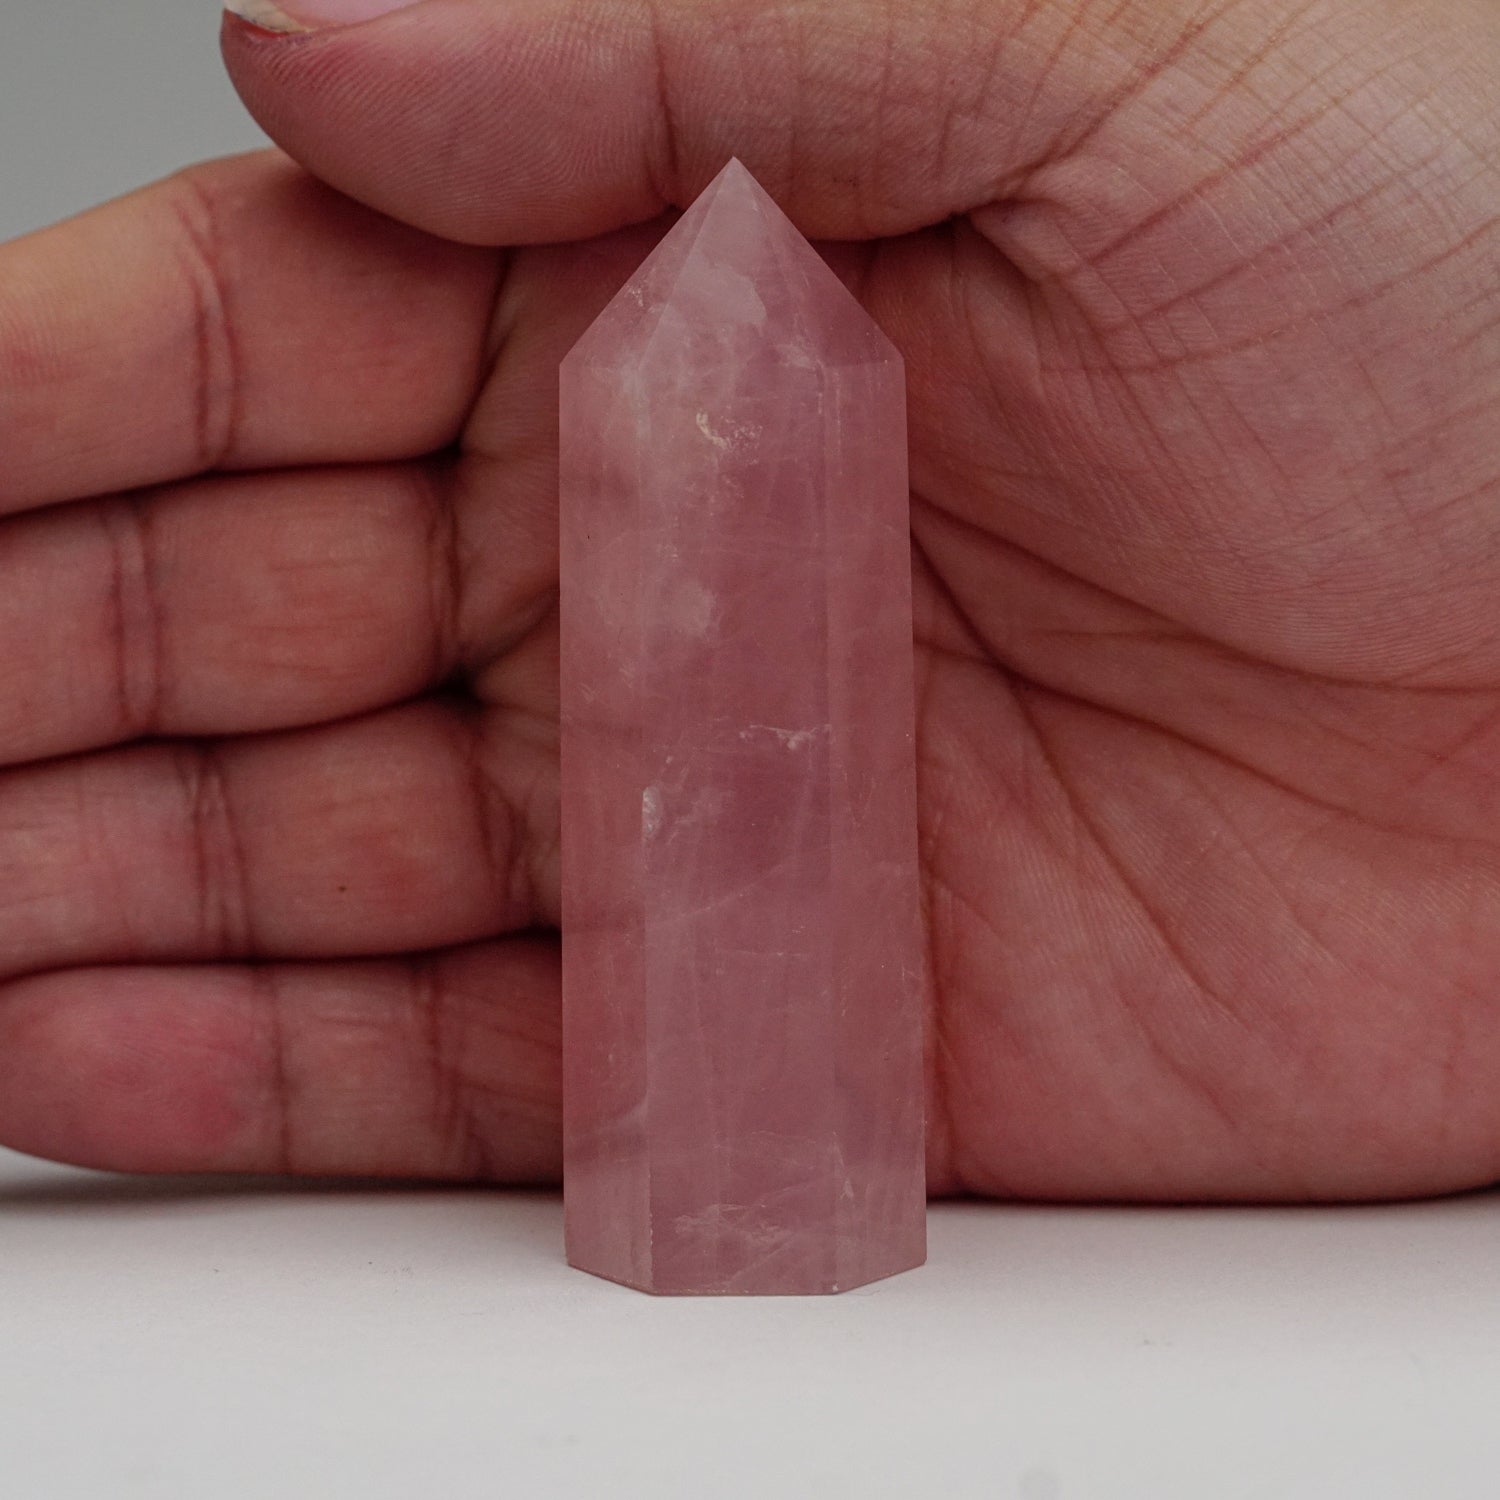 Rose Quartz Polished Point from Brazil (54.2 grams)